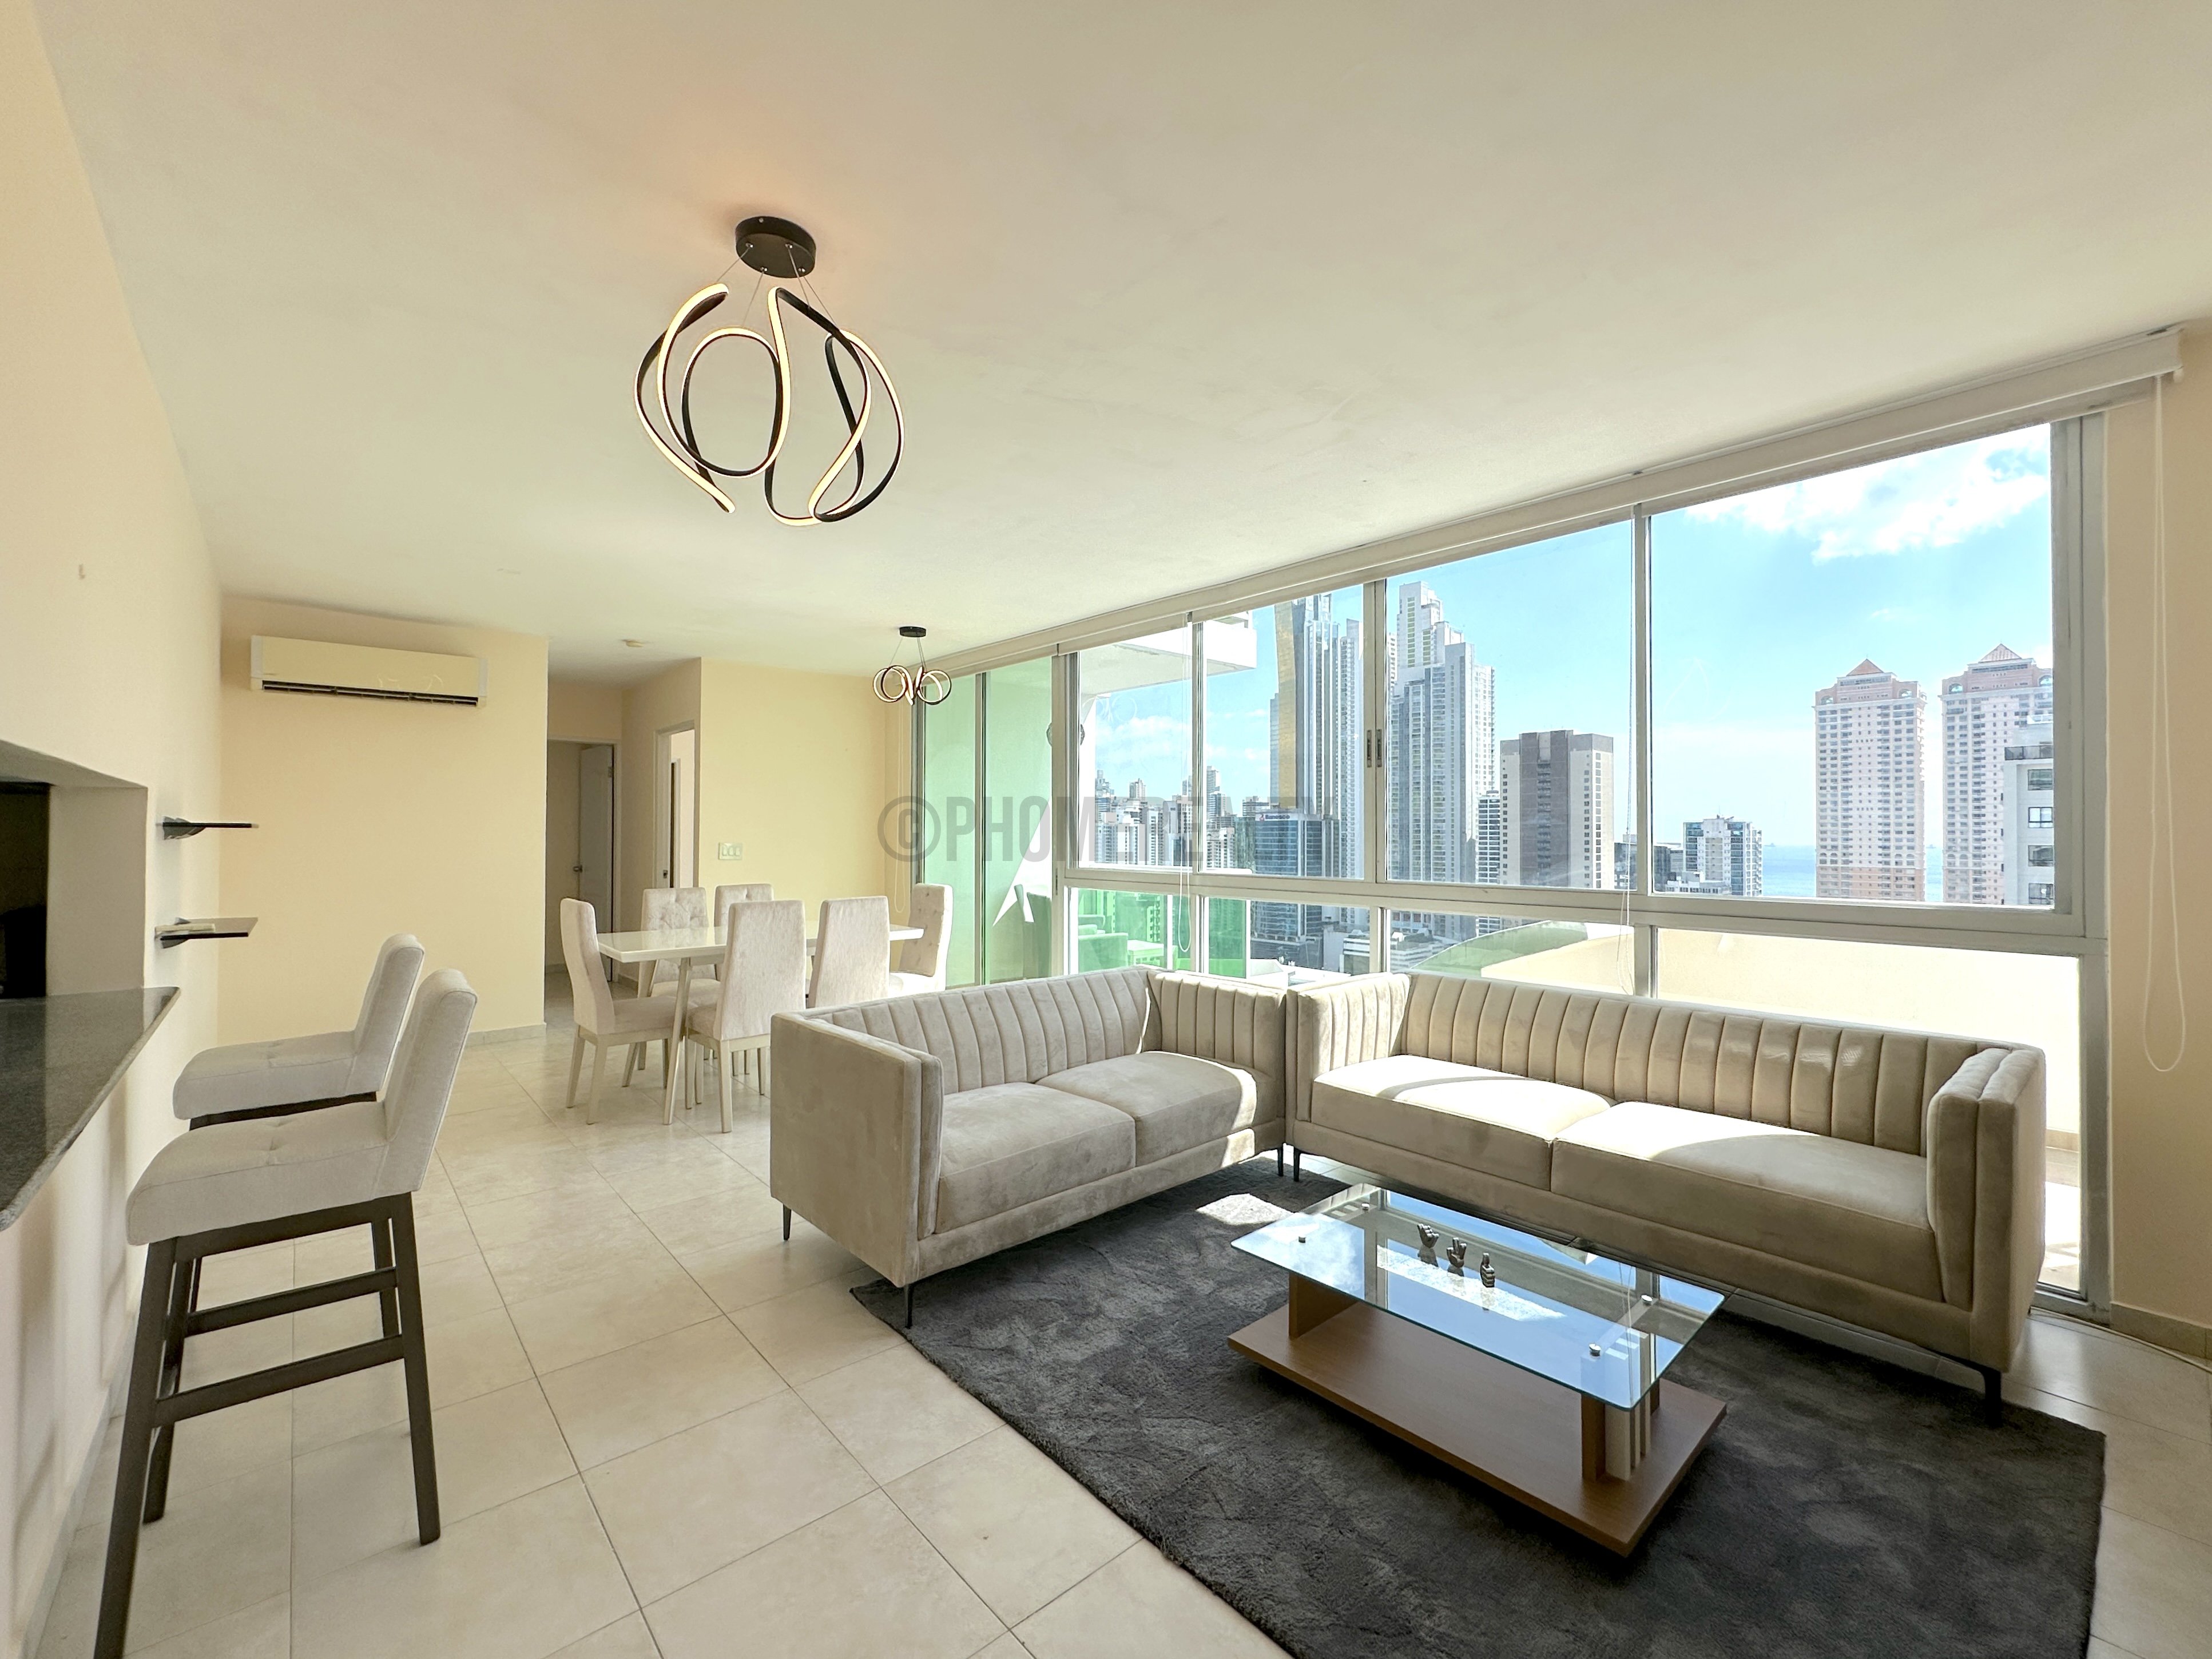 Divine fully furnished apartment in Bella vista for rent